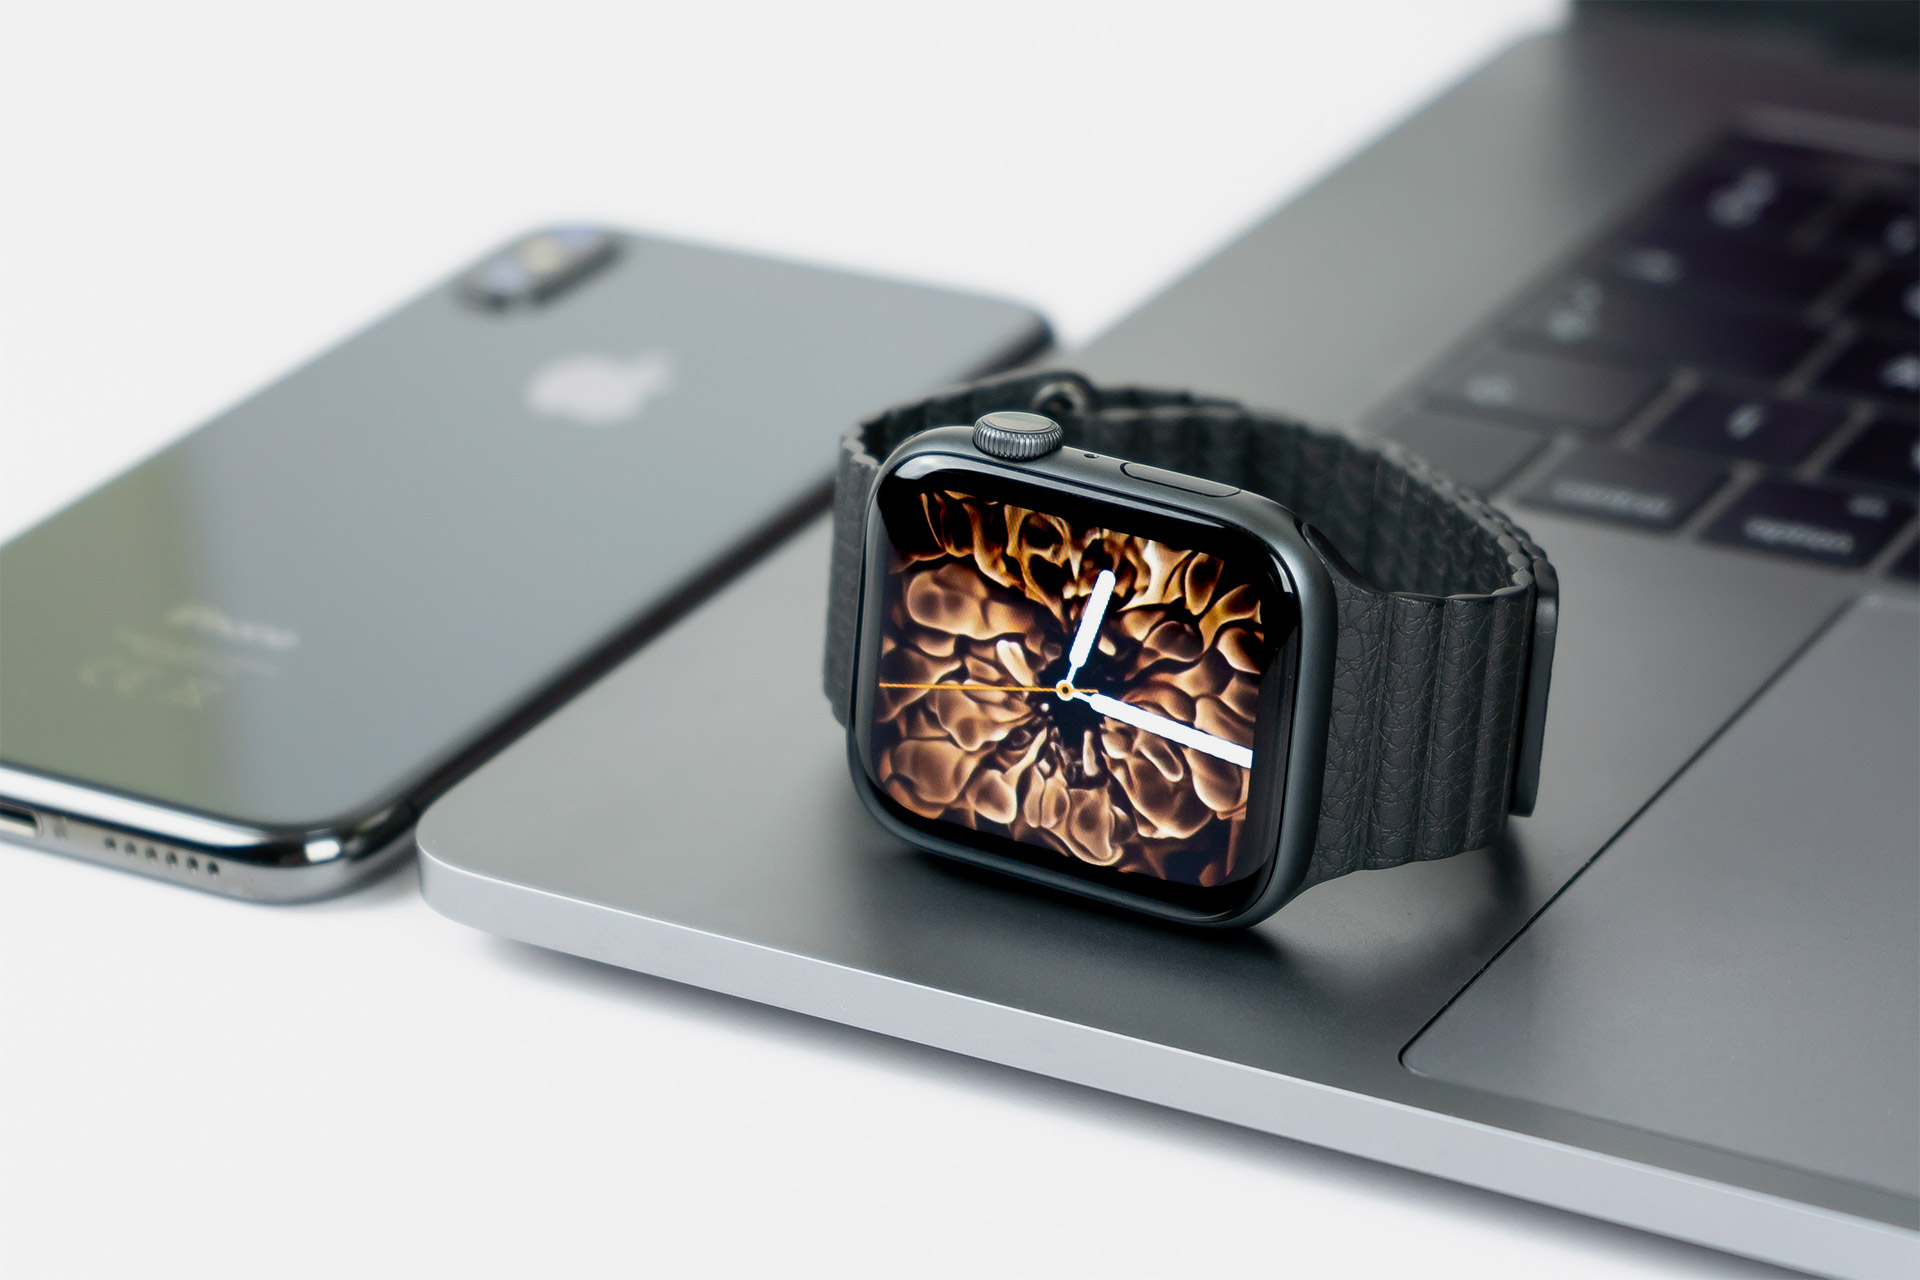 Hermes Apple Watch Series 4 review: Apple’s luxury wearable impresses